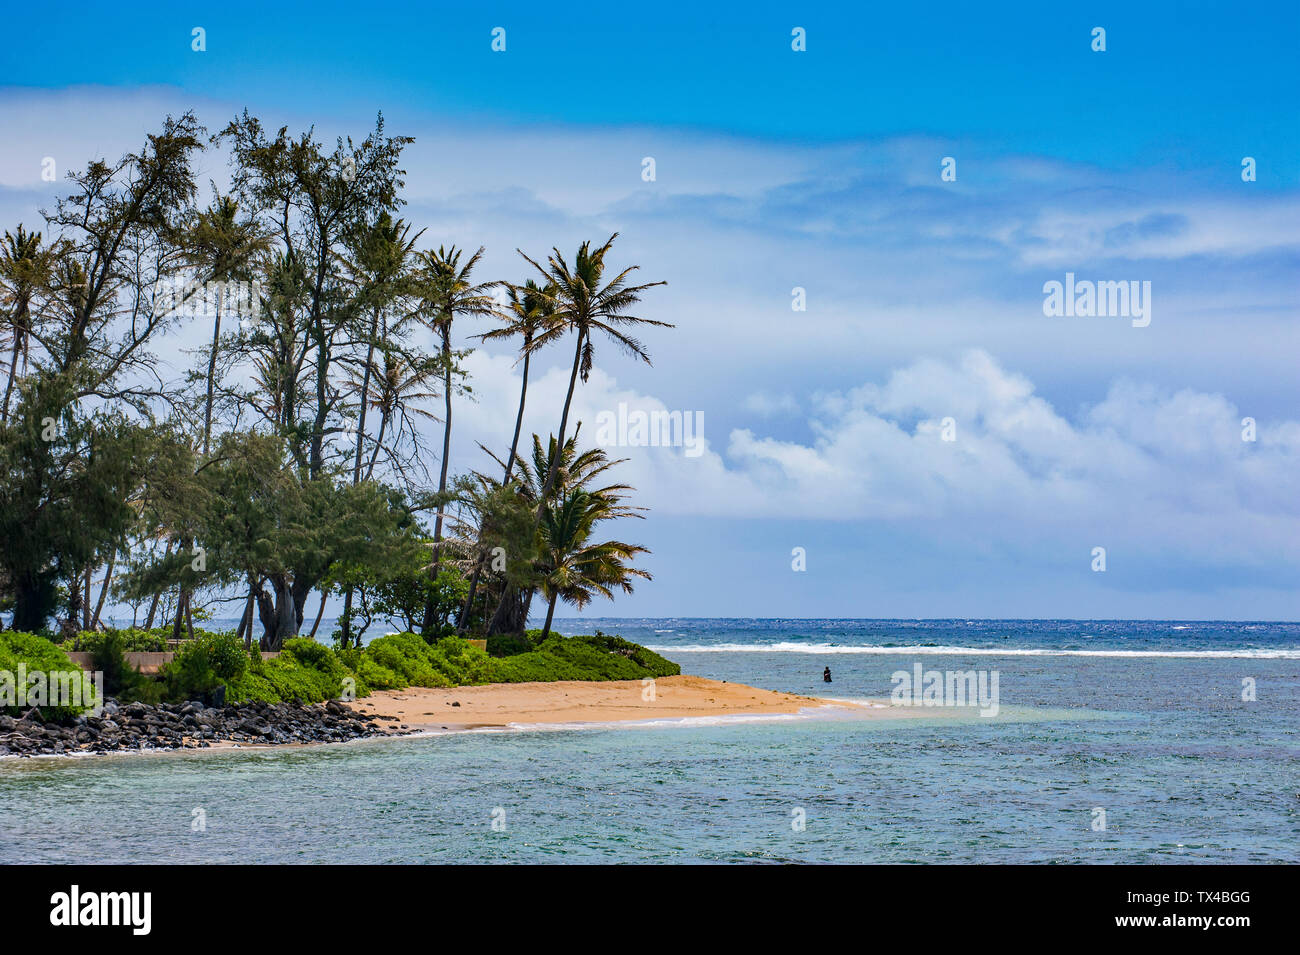 Hawai, la isla de Molokai, veinte millas de la playa Foto de stock